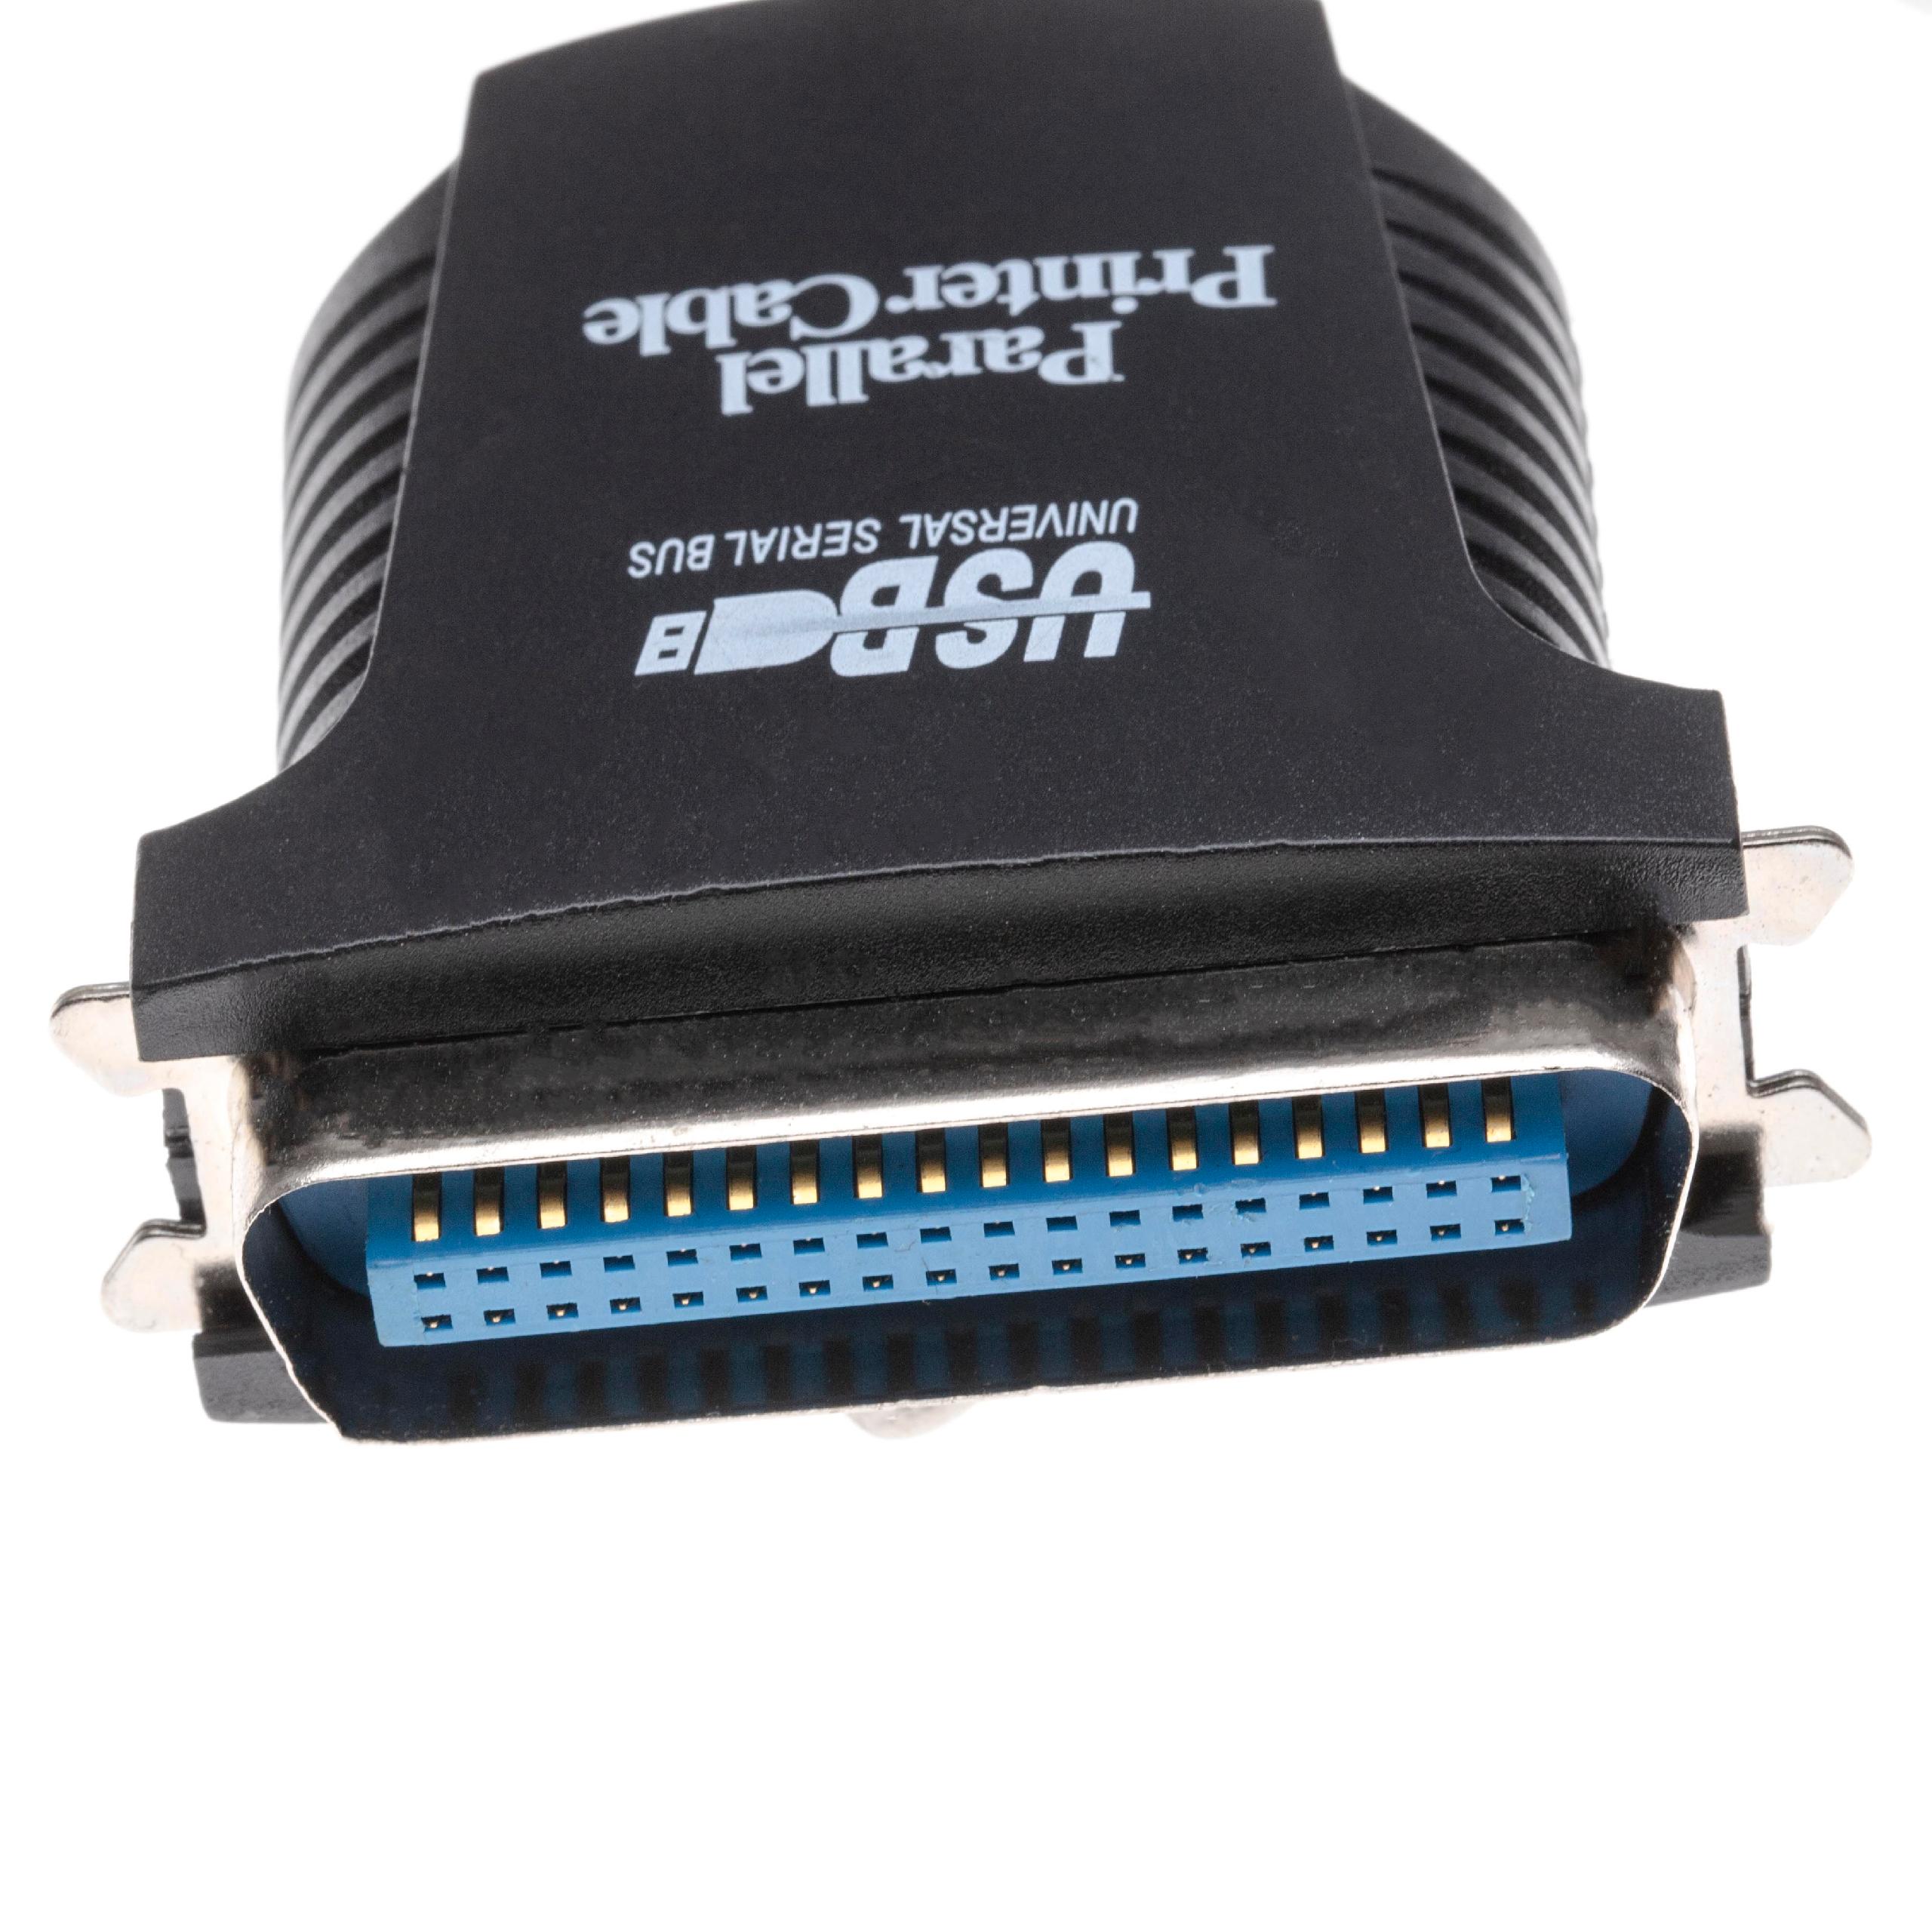 Cavo adattatore da USB A a connettore 36 pin per stampanti, scanner, dispositivi scanner - Cavo di connessione